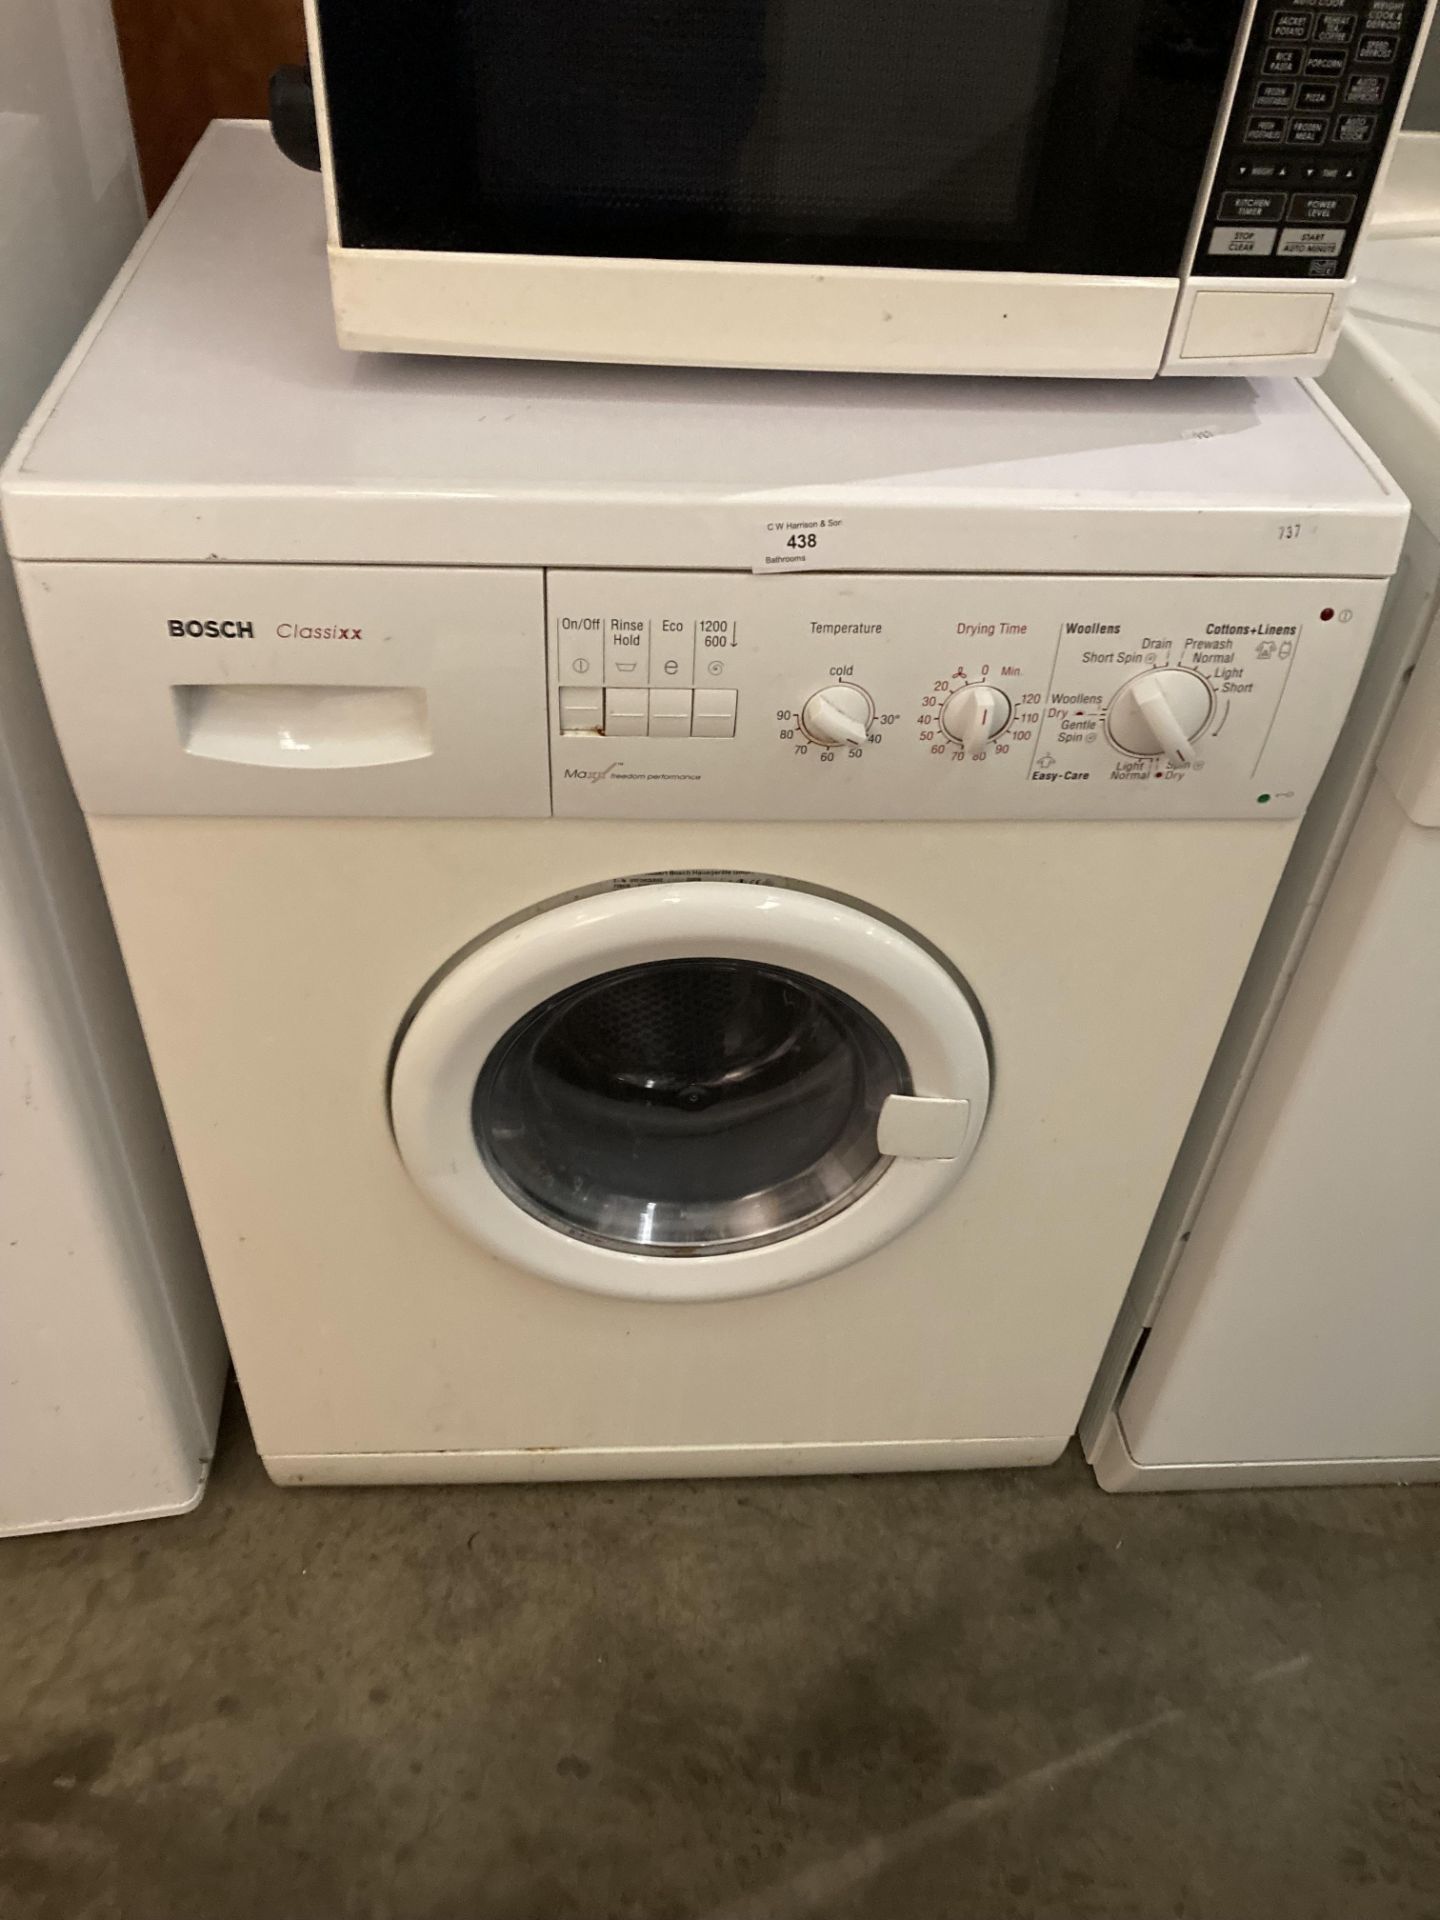 Bosch Classixx tumble dryer (saleroom location: PO)